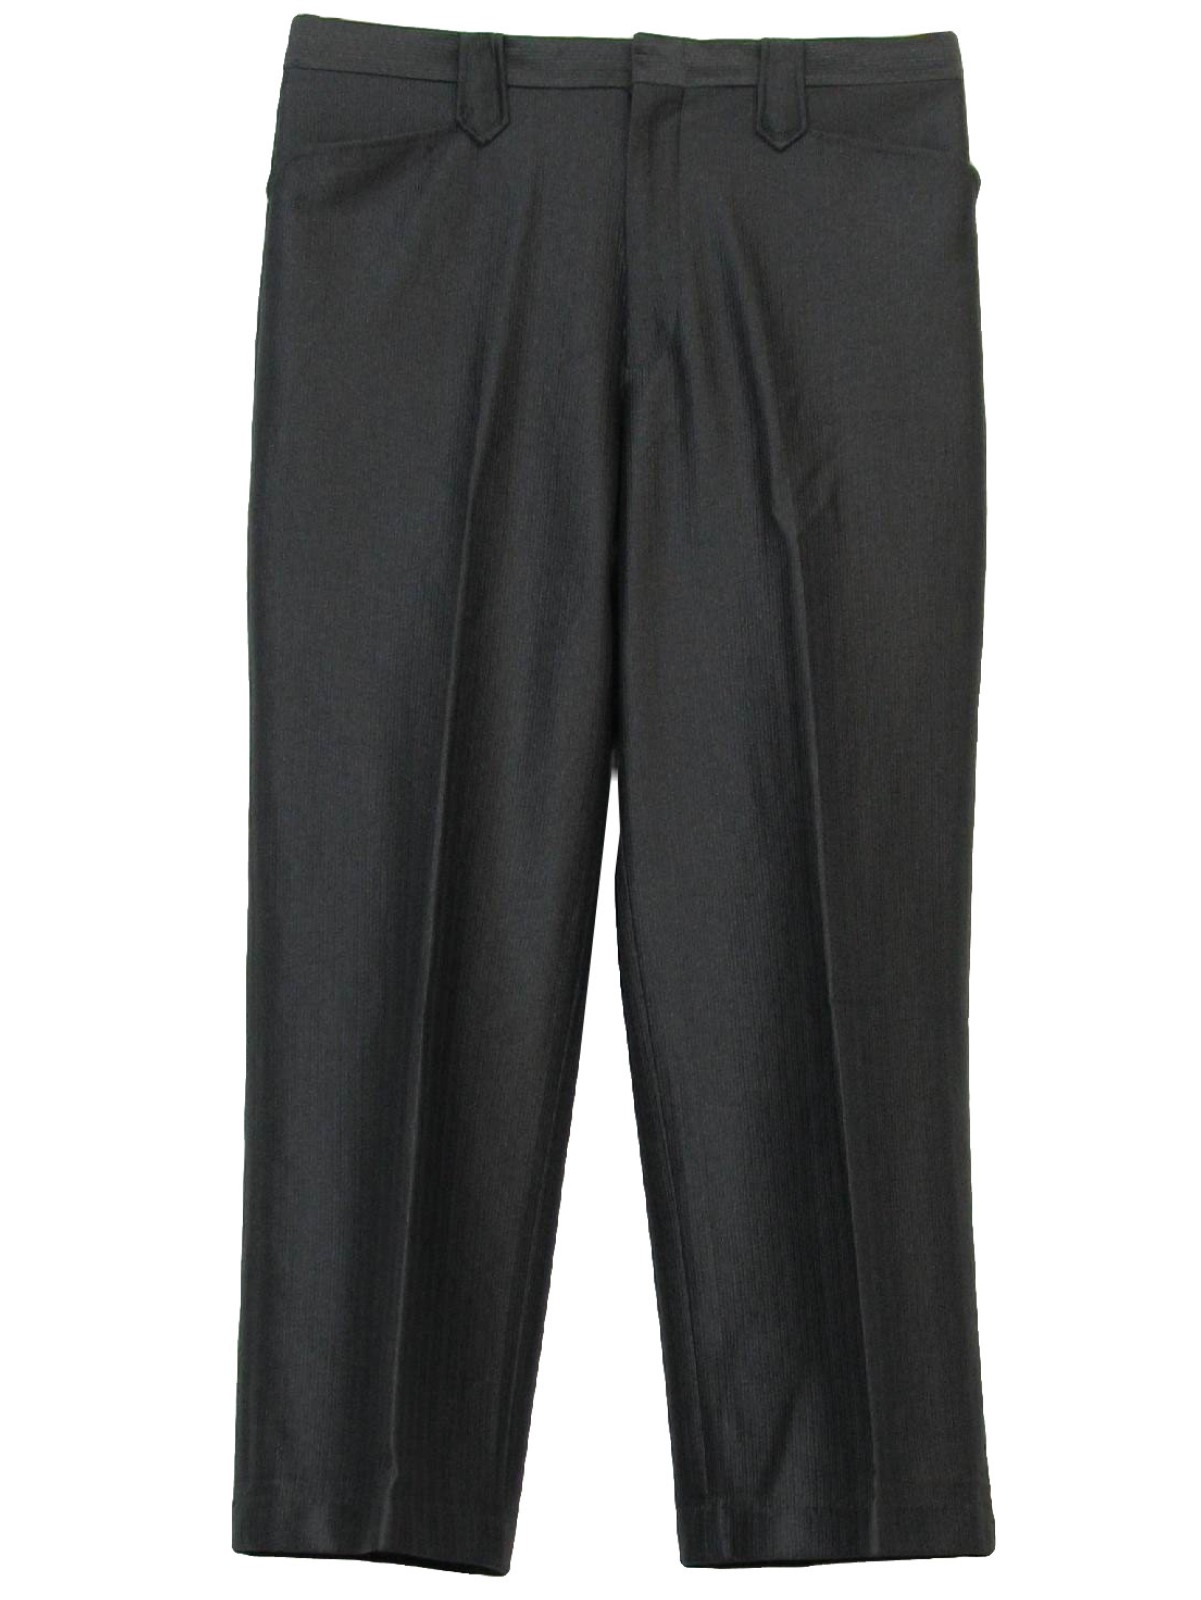 Grey work pants | Work pants, Pants, Clothes design